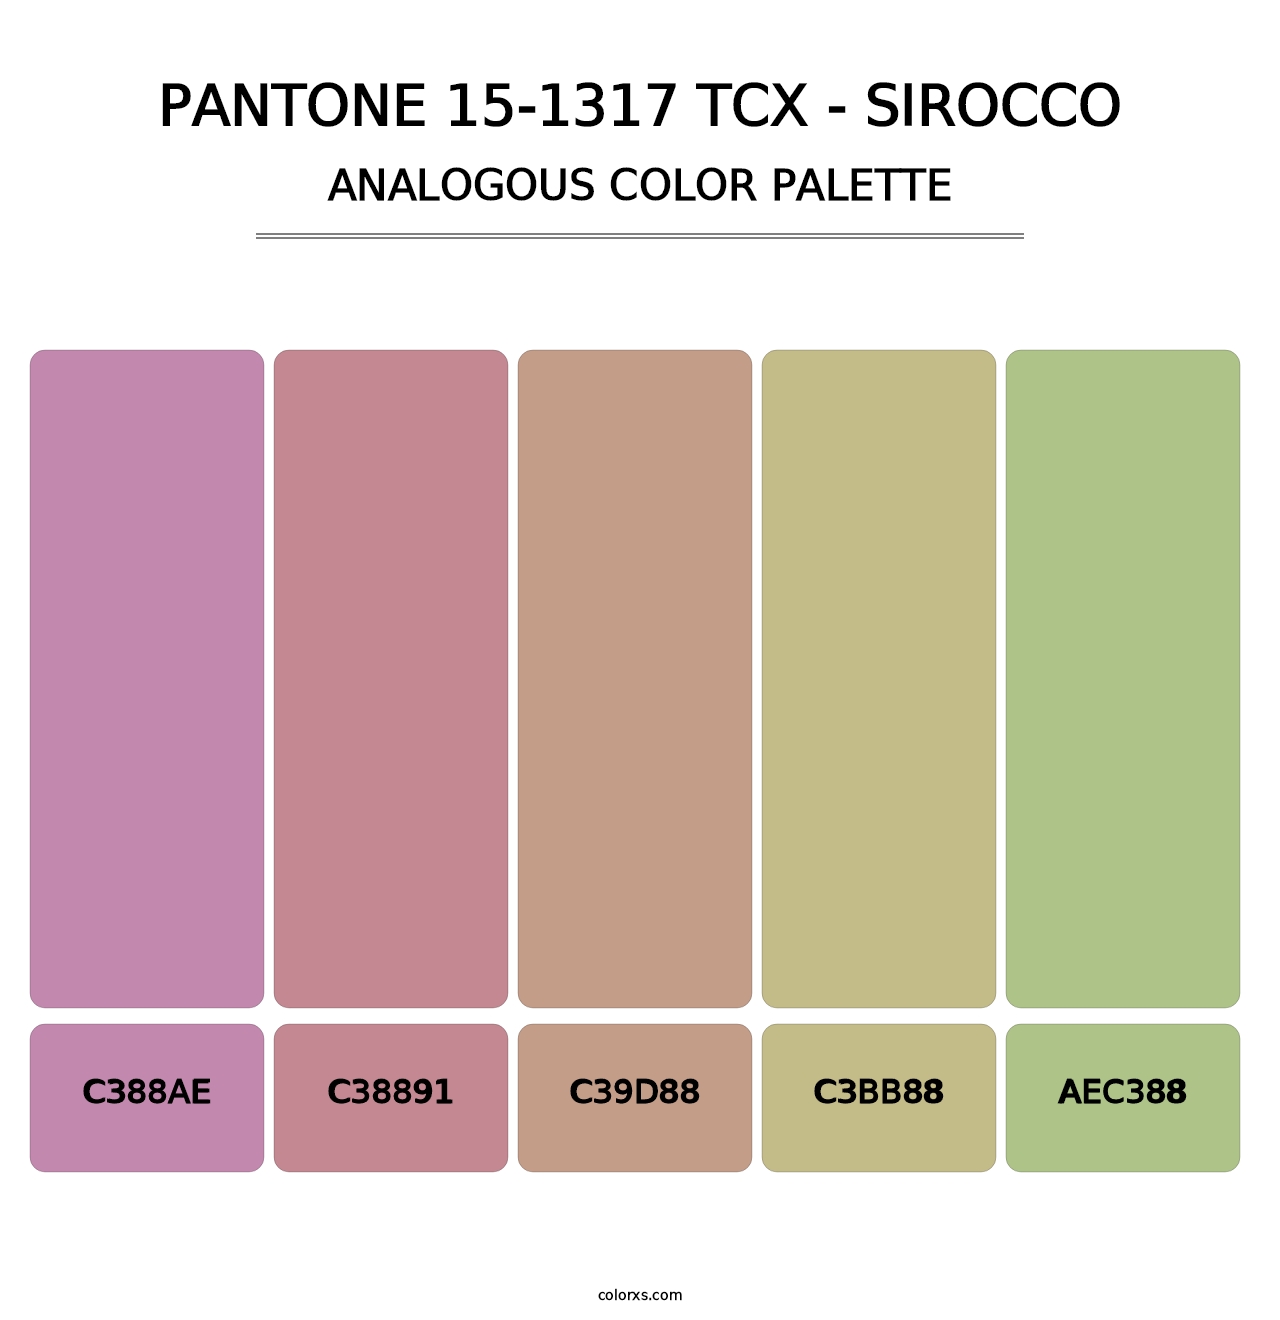 PANTONE 15-1317 TCX - Sirocco - Analogous Color Palette